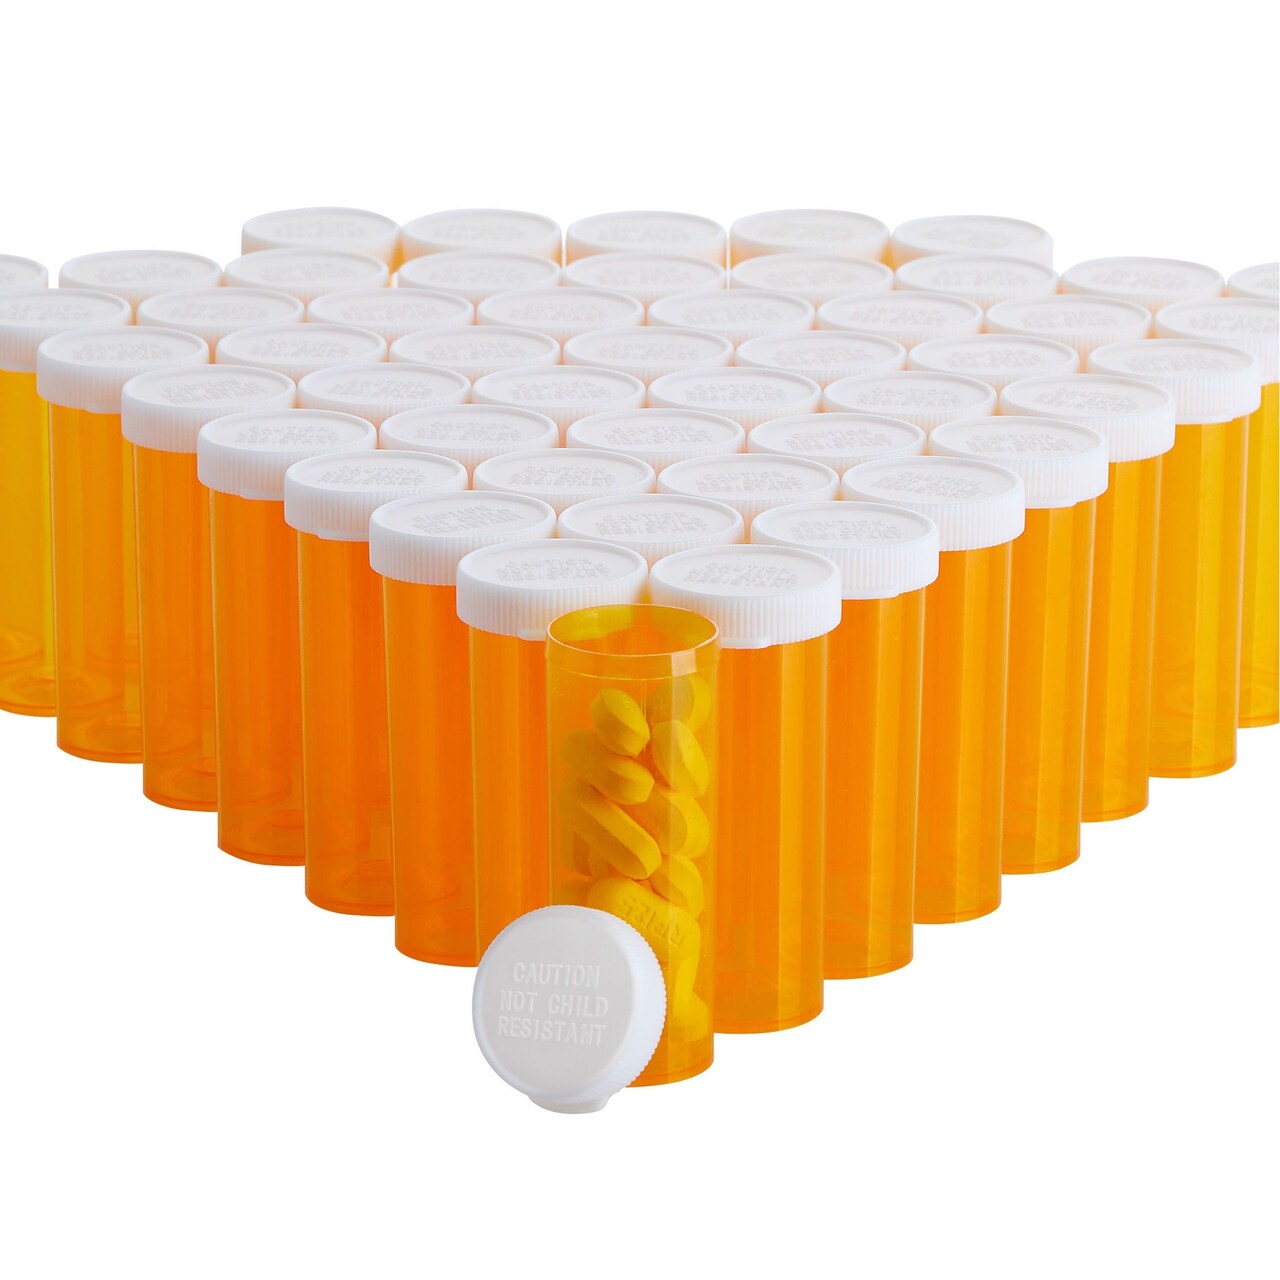 50 Pack Empty Pill Bottles with Caps for Prescription Medication, 8-Dram Plastic Medicine Container (Orange)